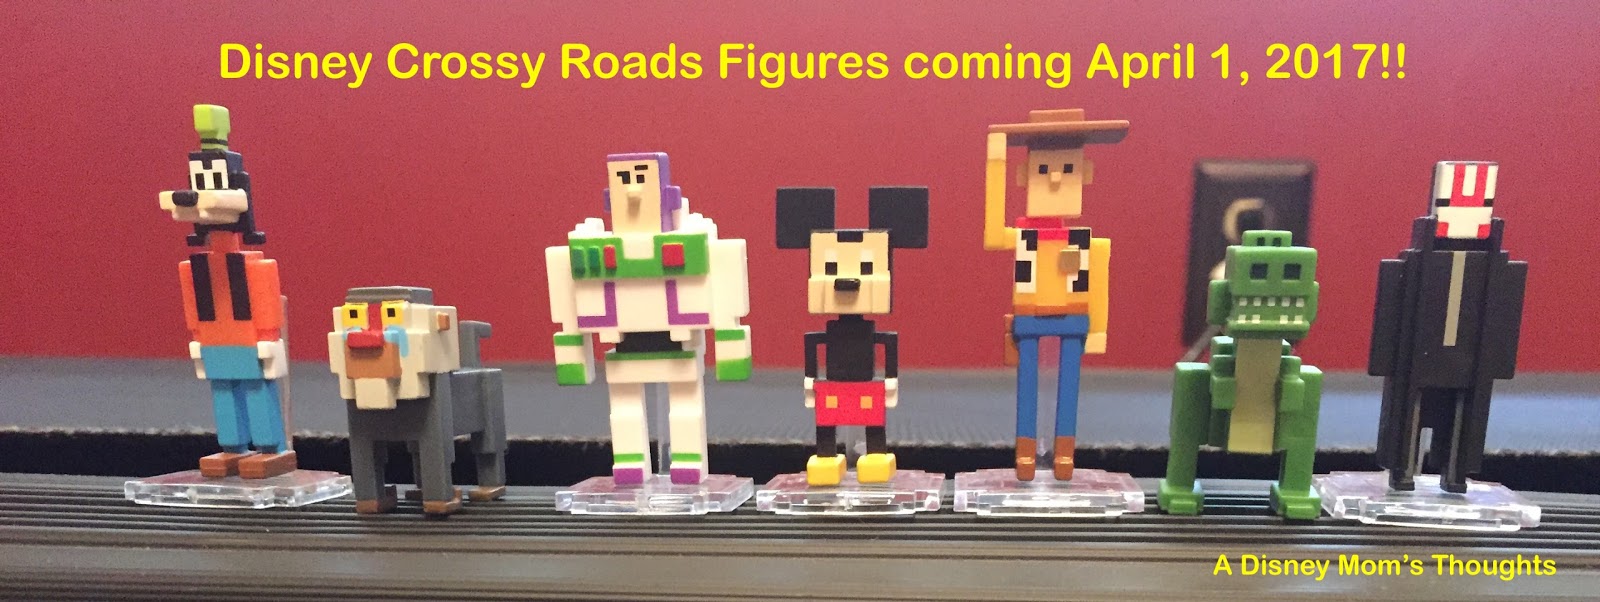 disney crossy road minifigures